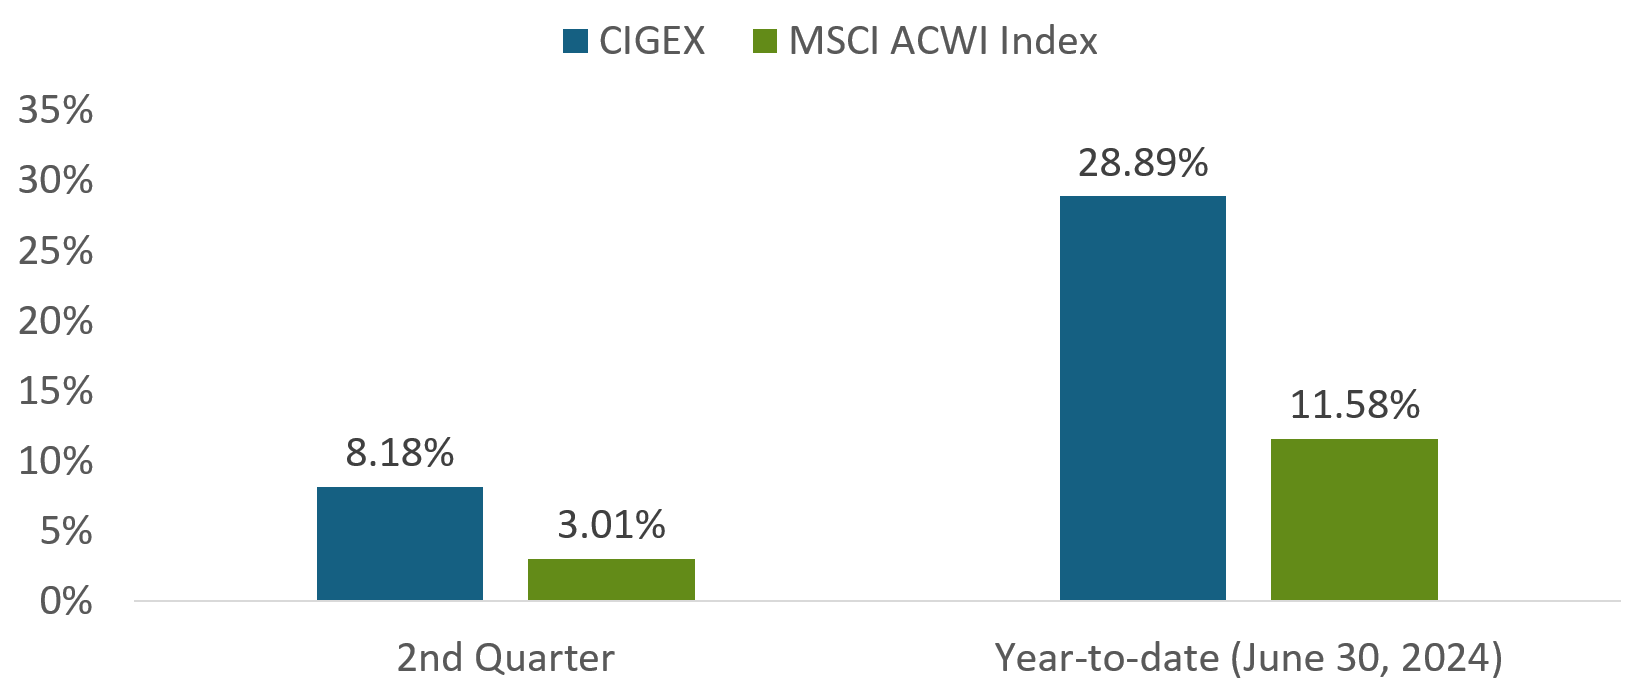 CIGEX vs MSCI ACWI Index